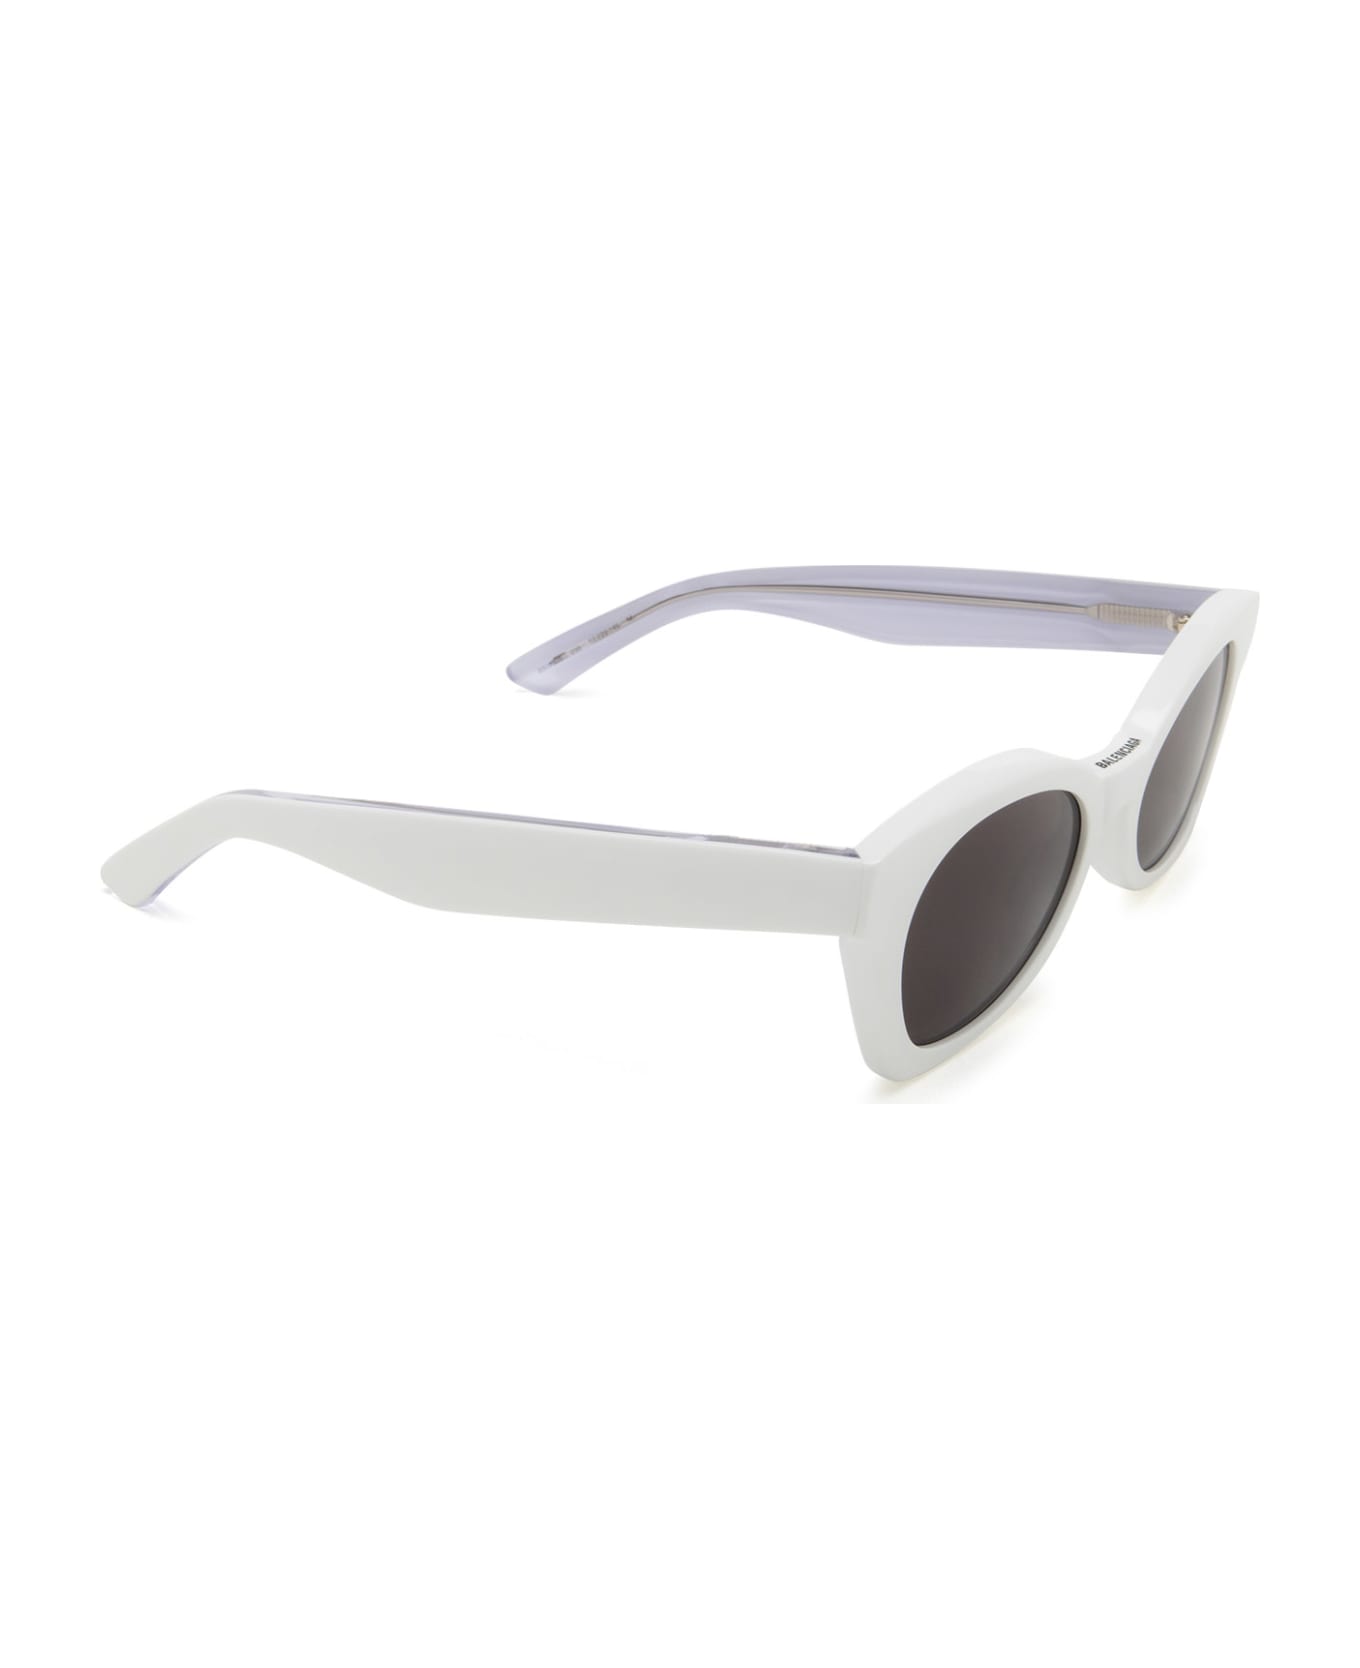 Balenciaga Eyewear Bb0230s Sunglasses - White